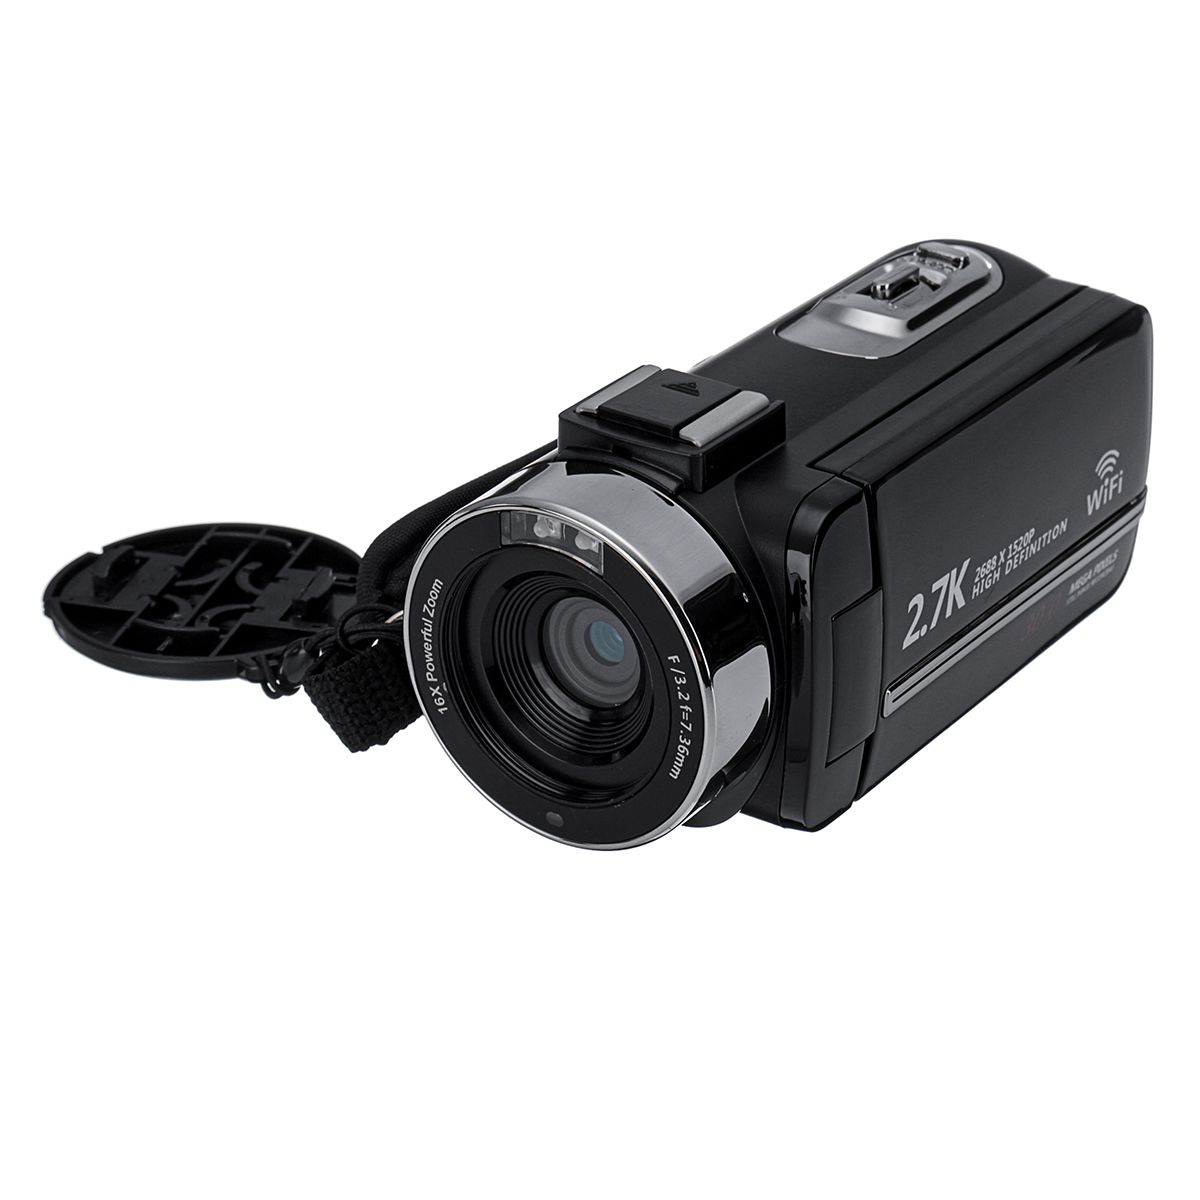 UHD-27K-1080P-30MP-16X-Zoom-3-inch-Touch-Screen-LCD-Digital-Camcorder-WiFi-IR-Night-Vision-Video-DV--1667244